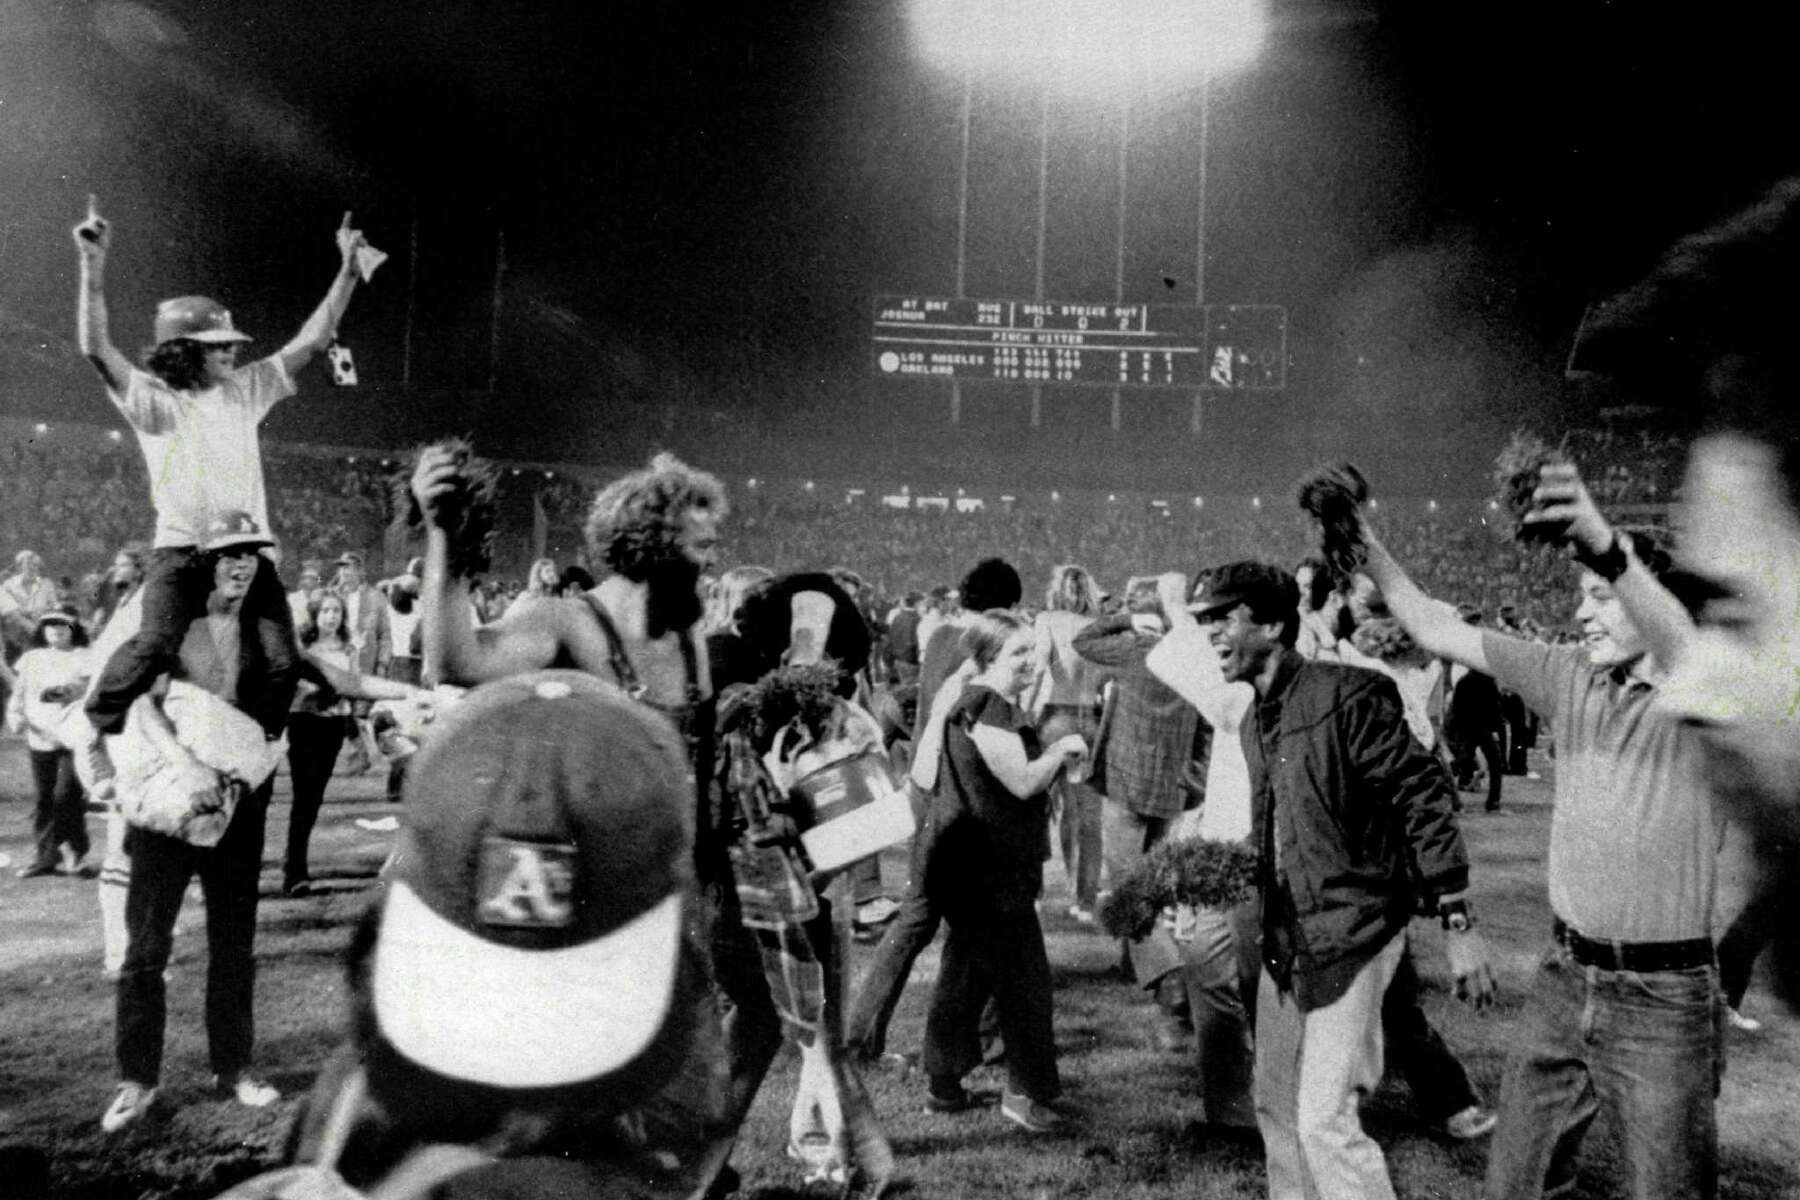  Legends Never Die 1974 Oakland Athletics World